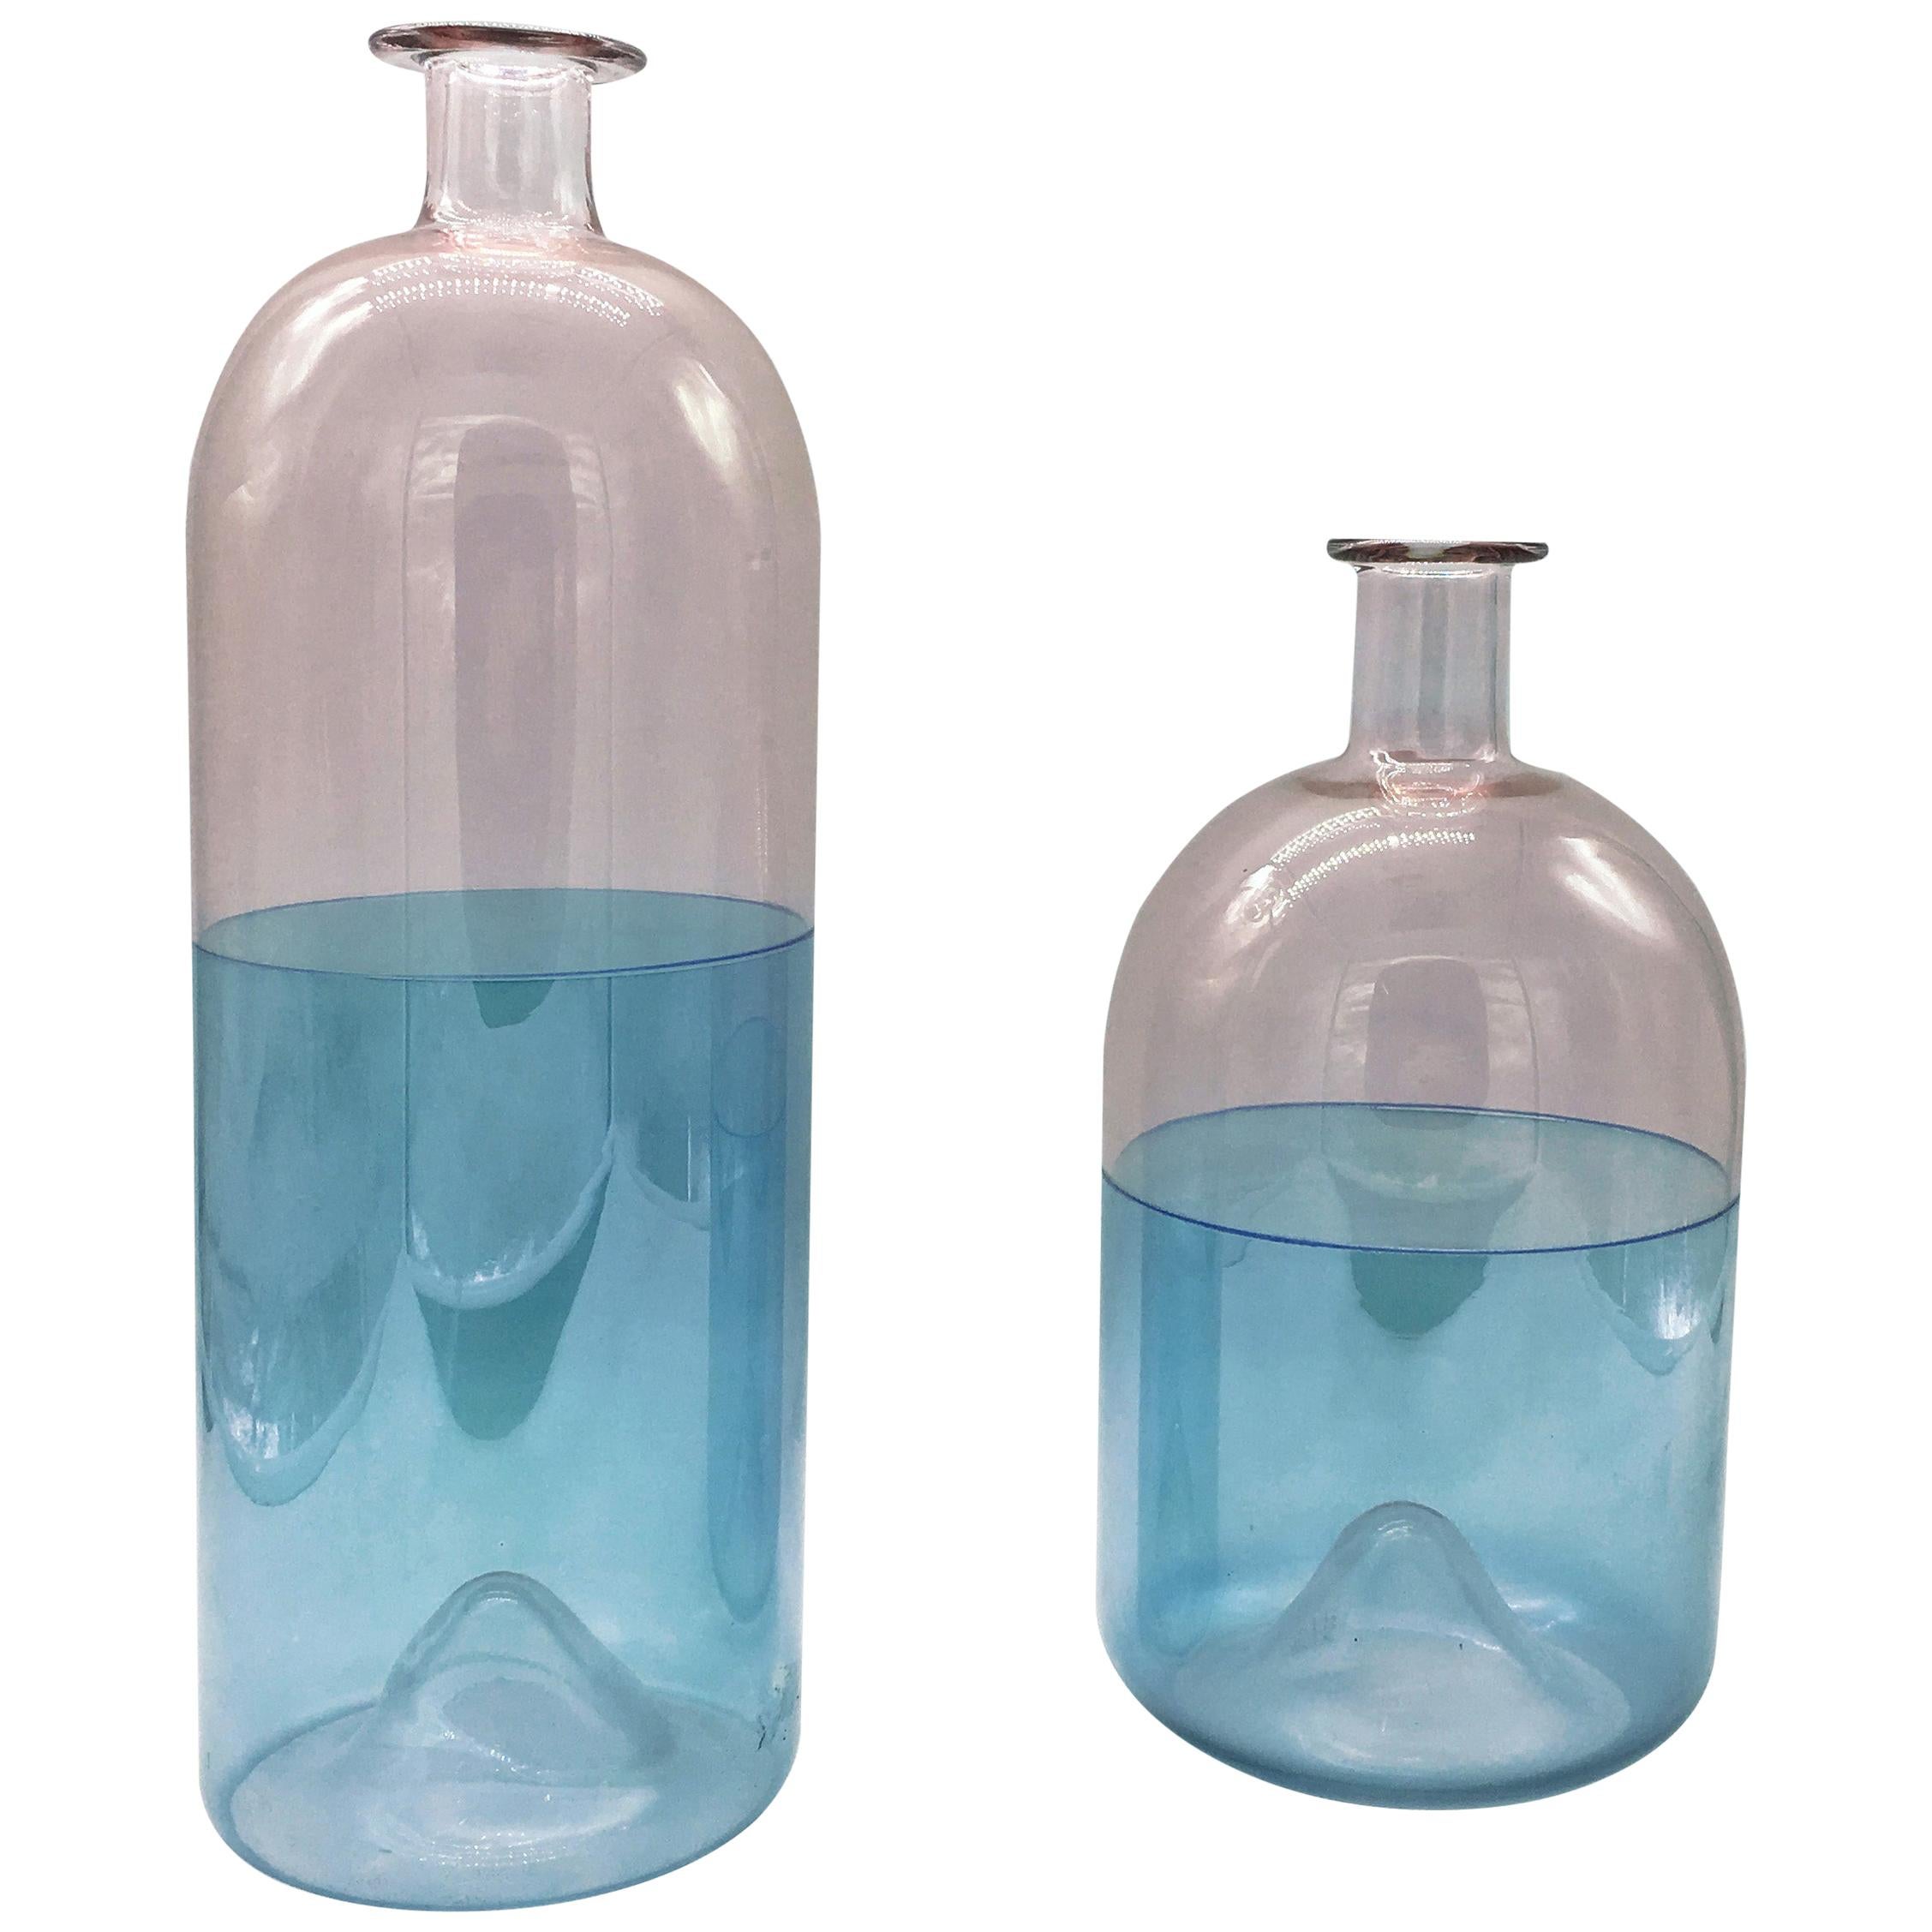 Midcentury Italian Murano Glass Bottles in the Style of Venini, 1960s, Set of 2